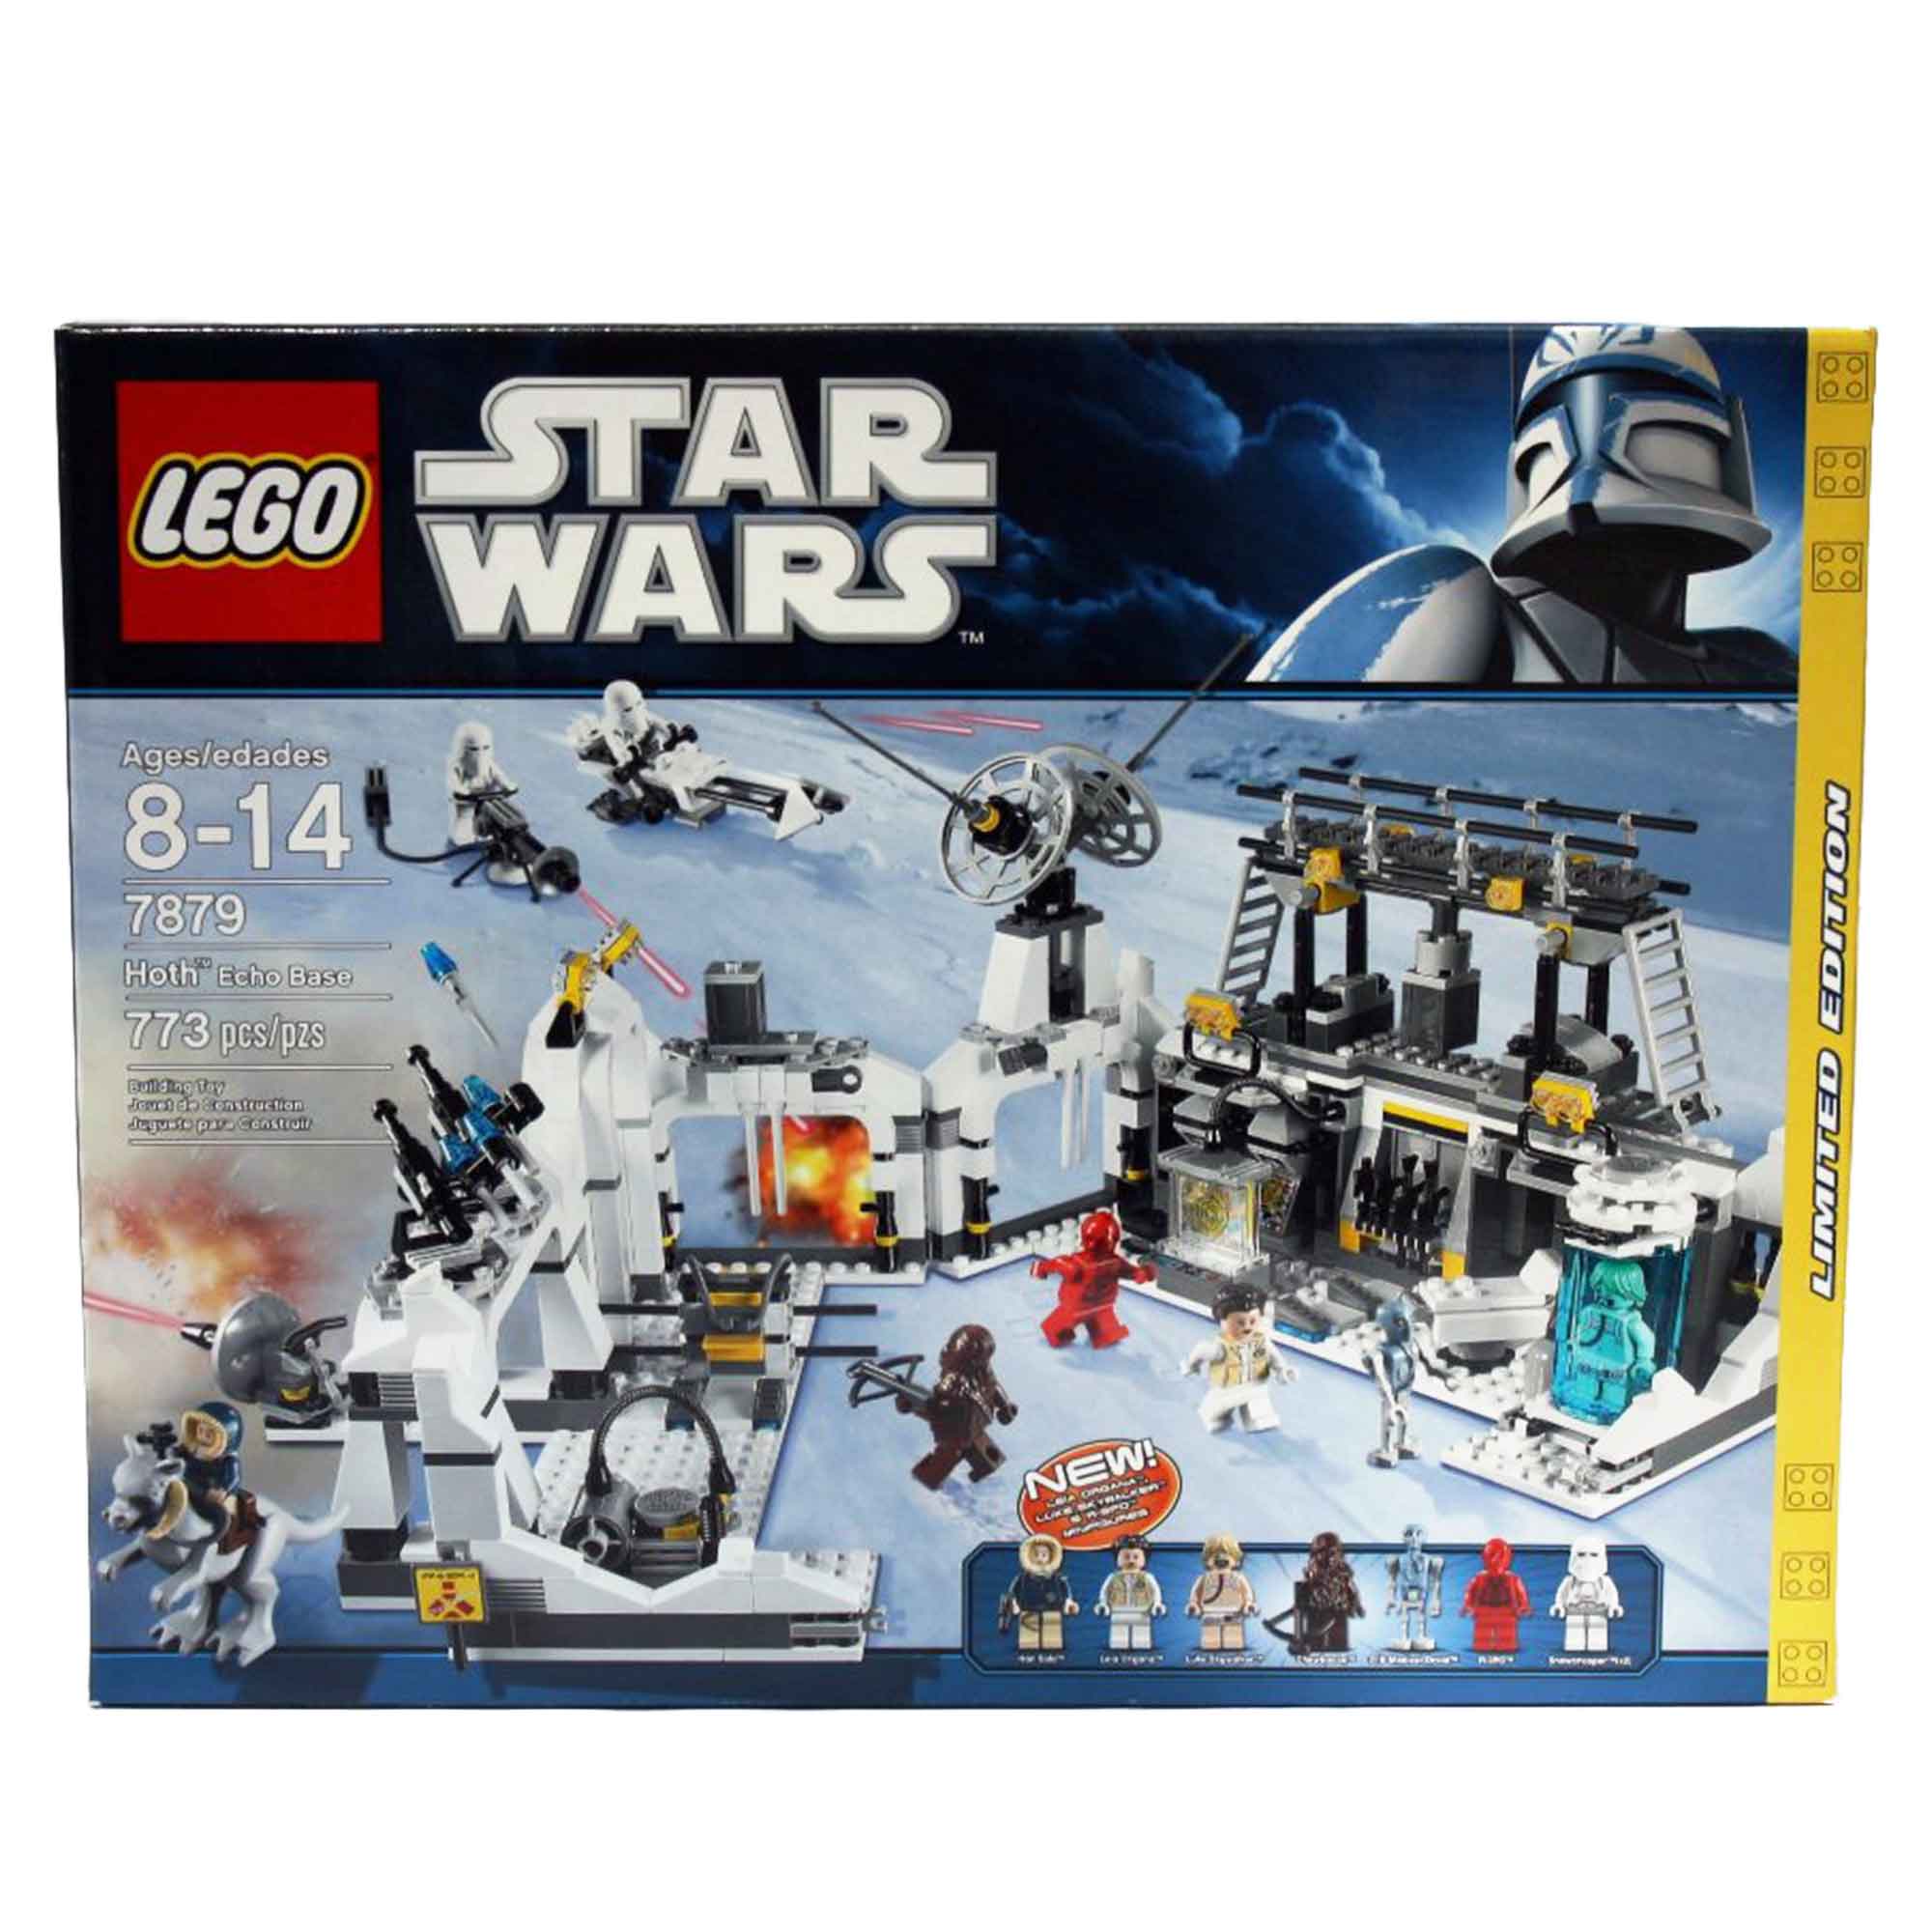 Productie Ongeëvenaard Senaat Lego Star Wars 7879 Hoth Echo Base | Losseminifiguren.nl